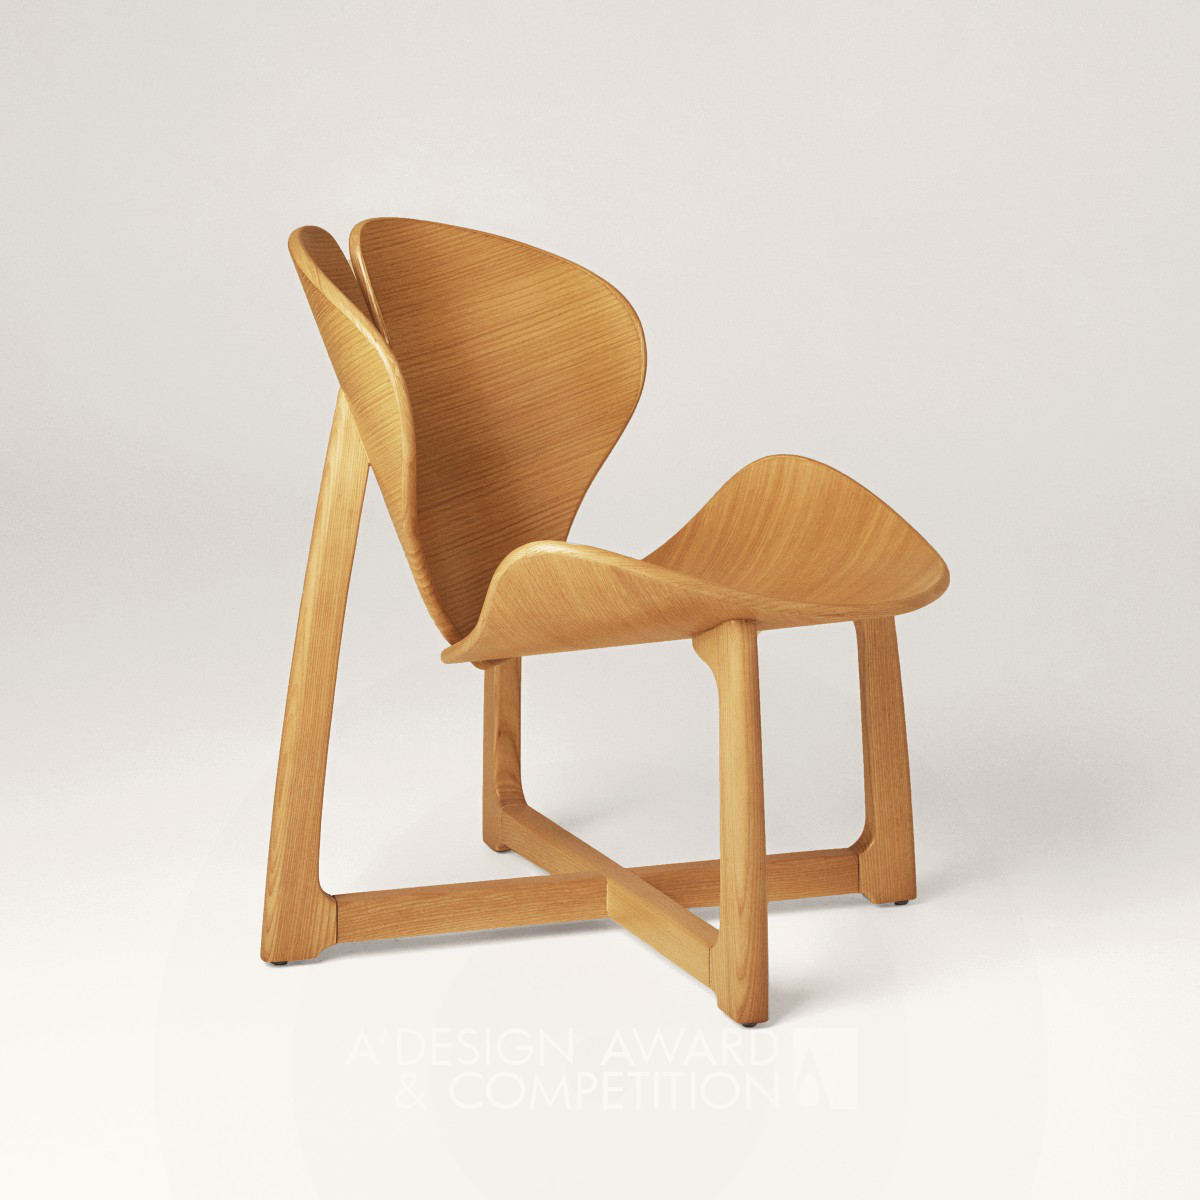 DANWEI ZHAO wins Silver at the prestigious A' Furniture Design Award with Alskar Lounge Chair.